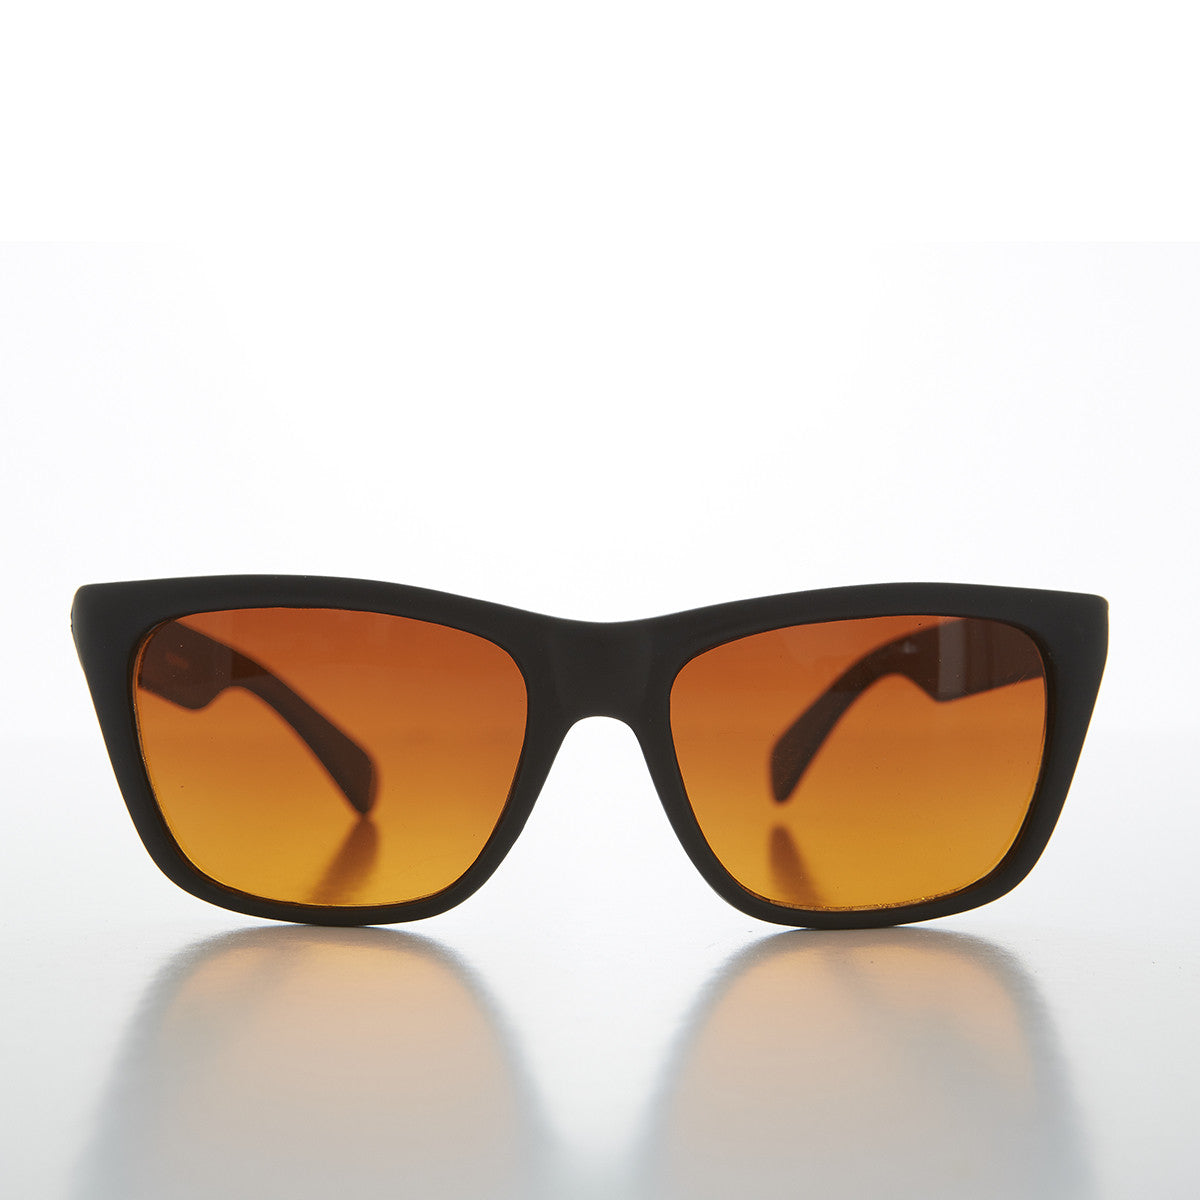 Classic Square Black Sunglasses with Amber Lens - Toni